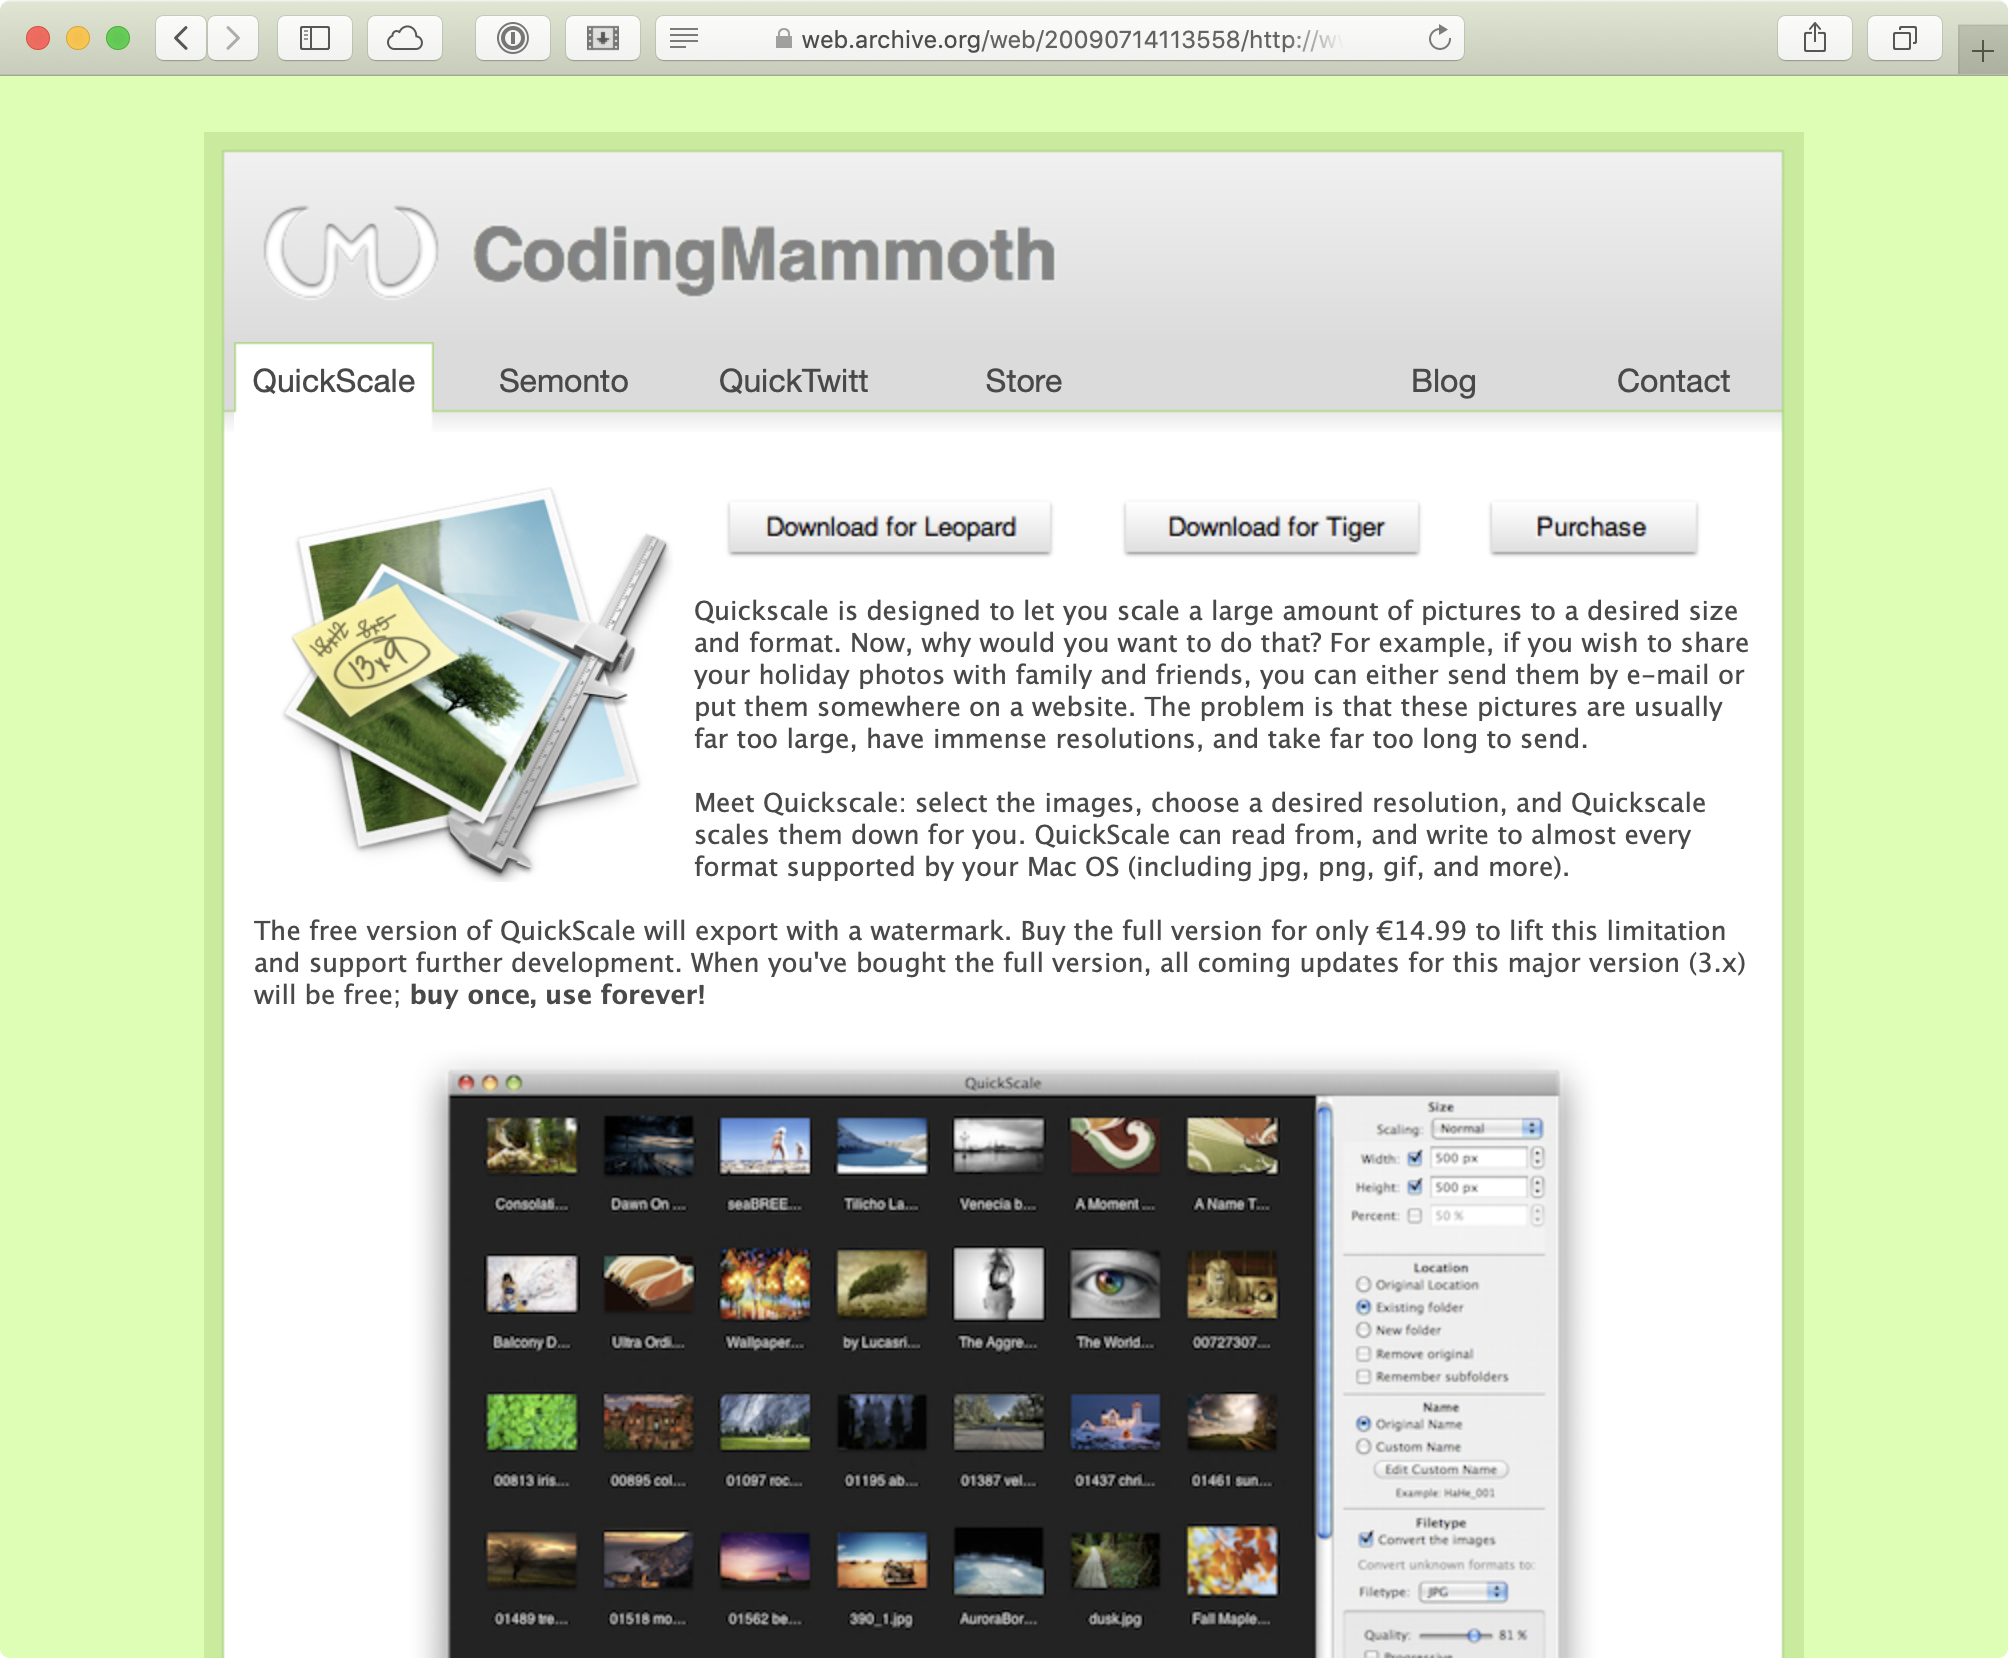 Website Coding Mammoth QuickScale 2009